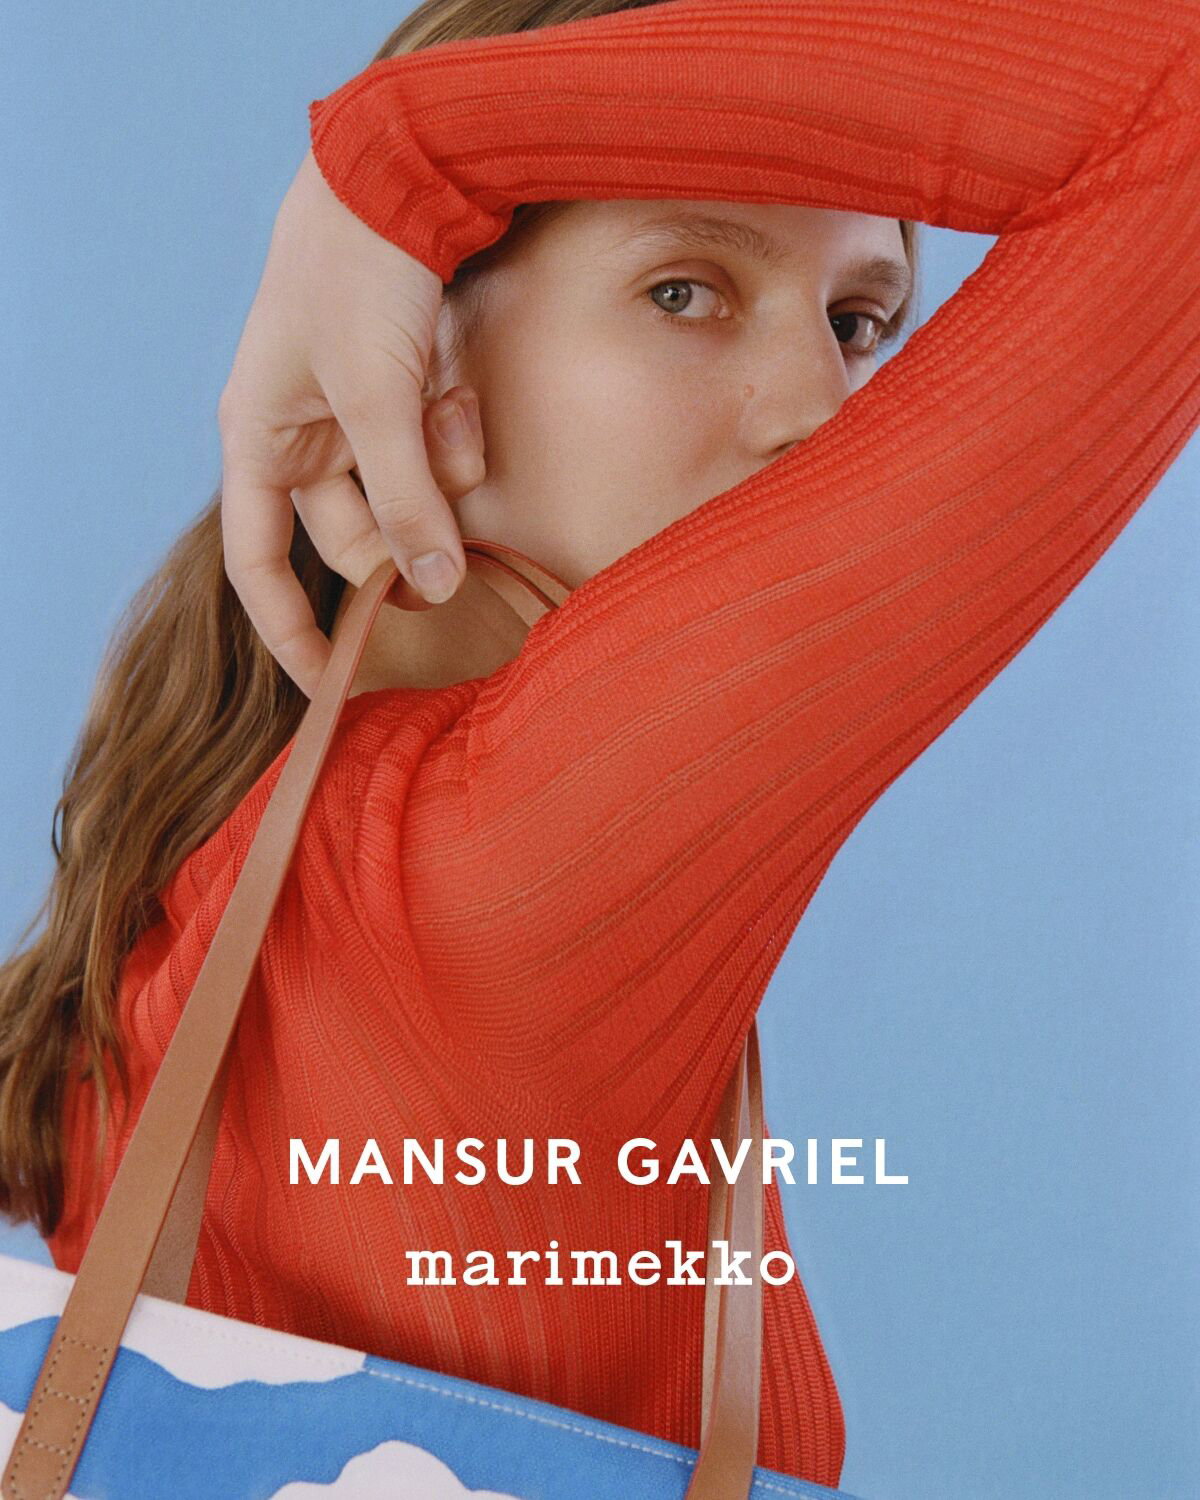 Marimekko : First look at Mansur Gavriel x Marimekko collaboration | Milled